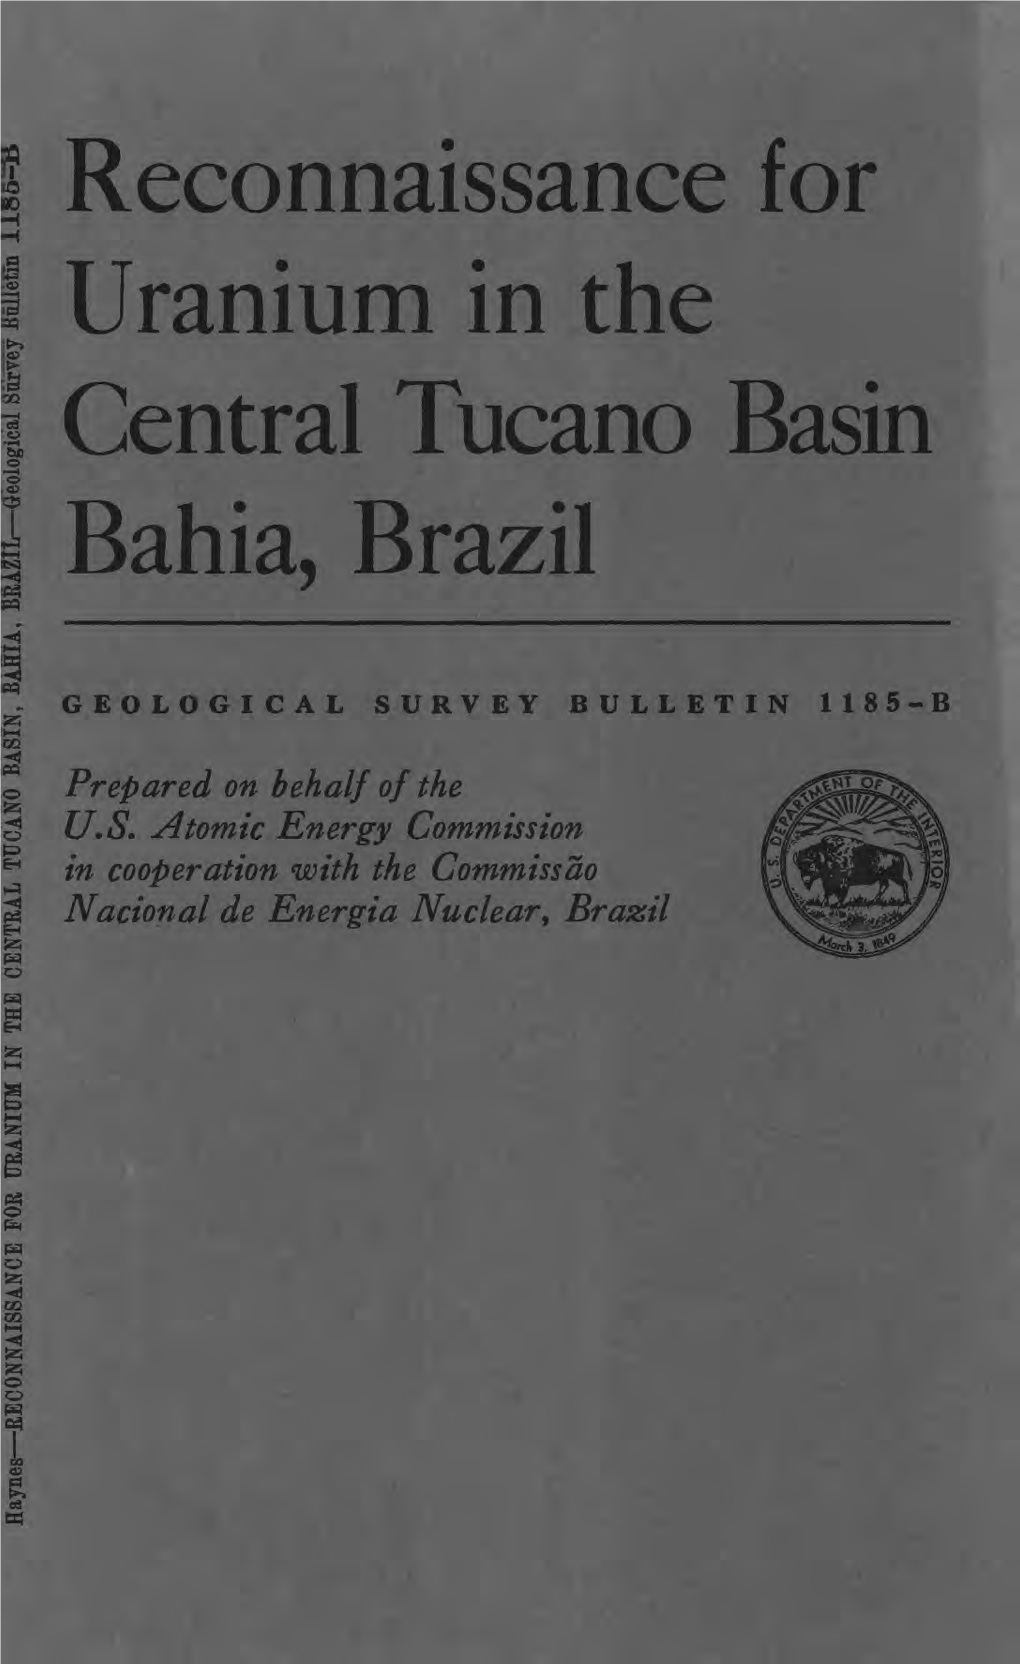 Reconnaissance for Uranium in the Central Tucano Basin Bahia, Brazil